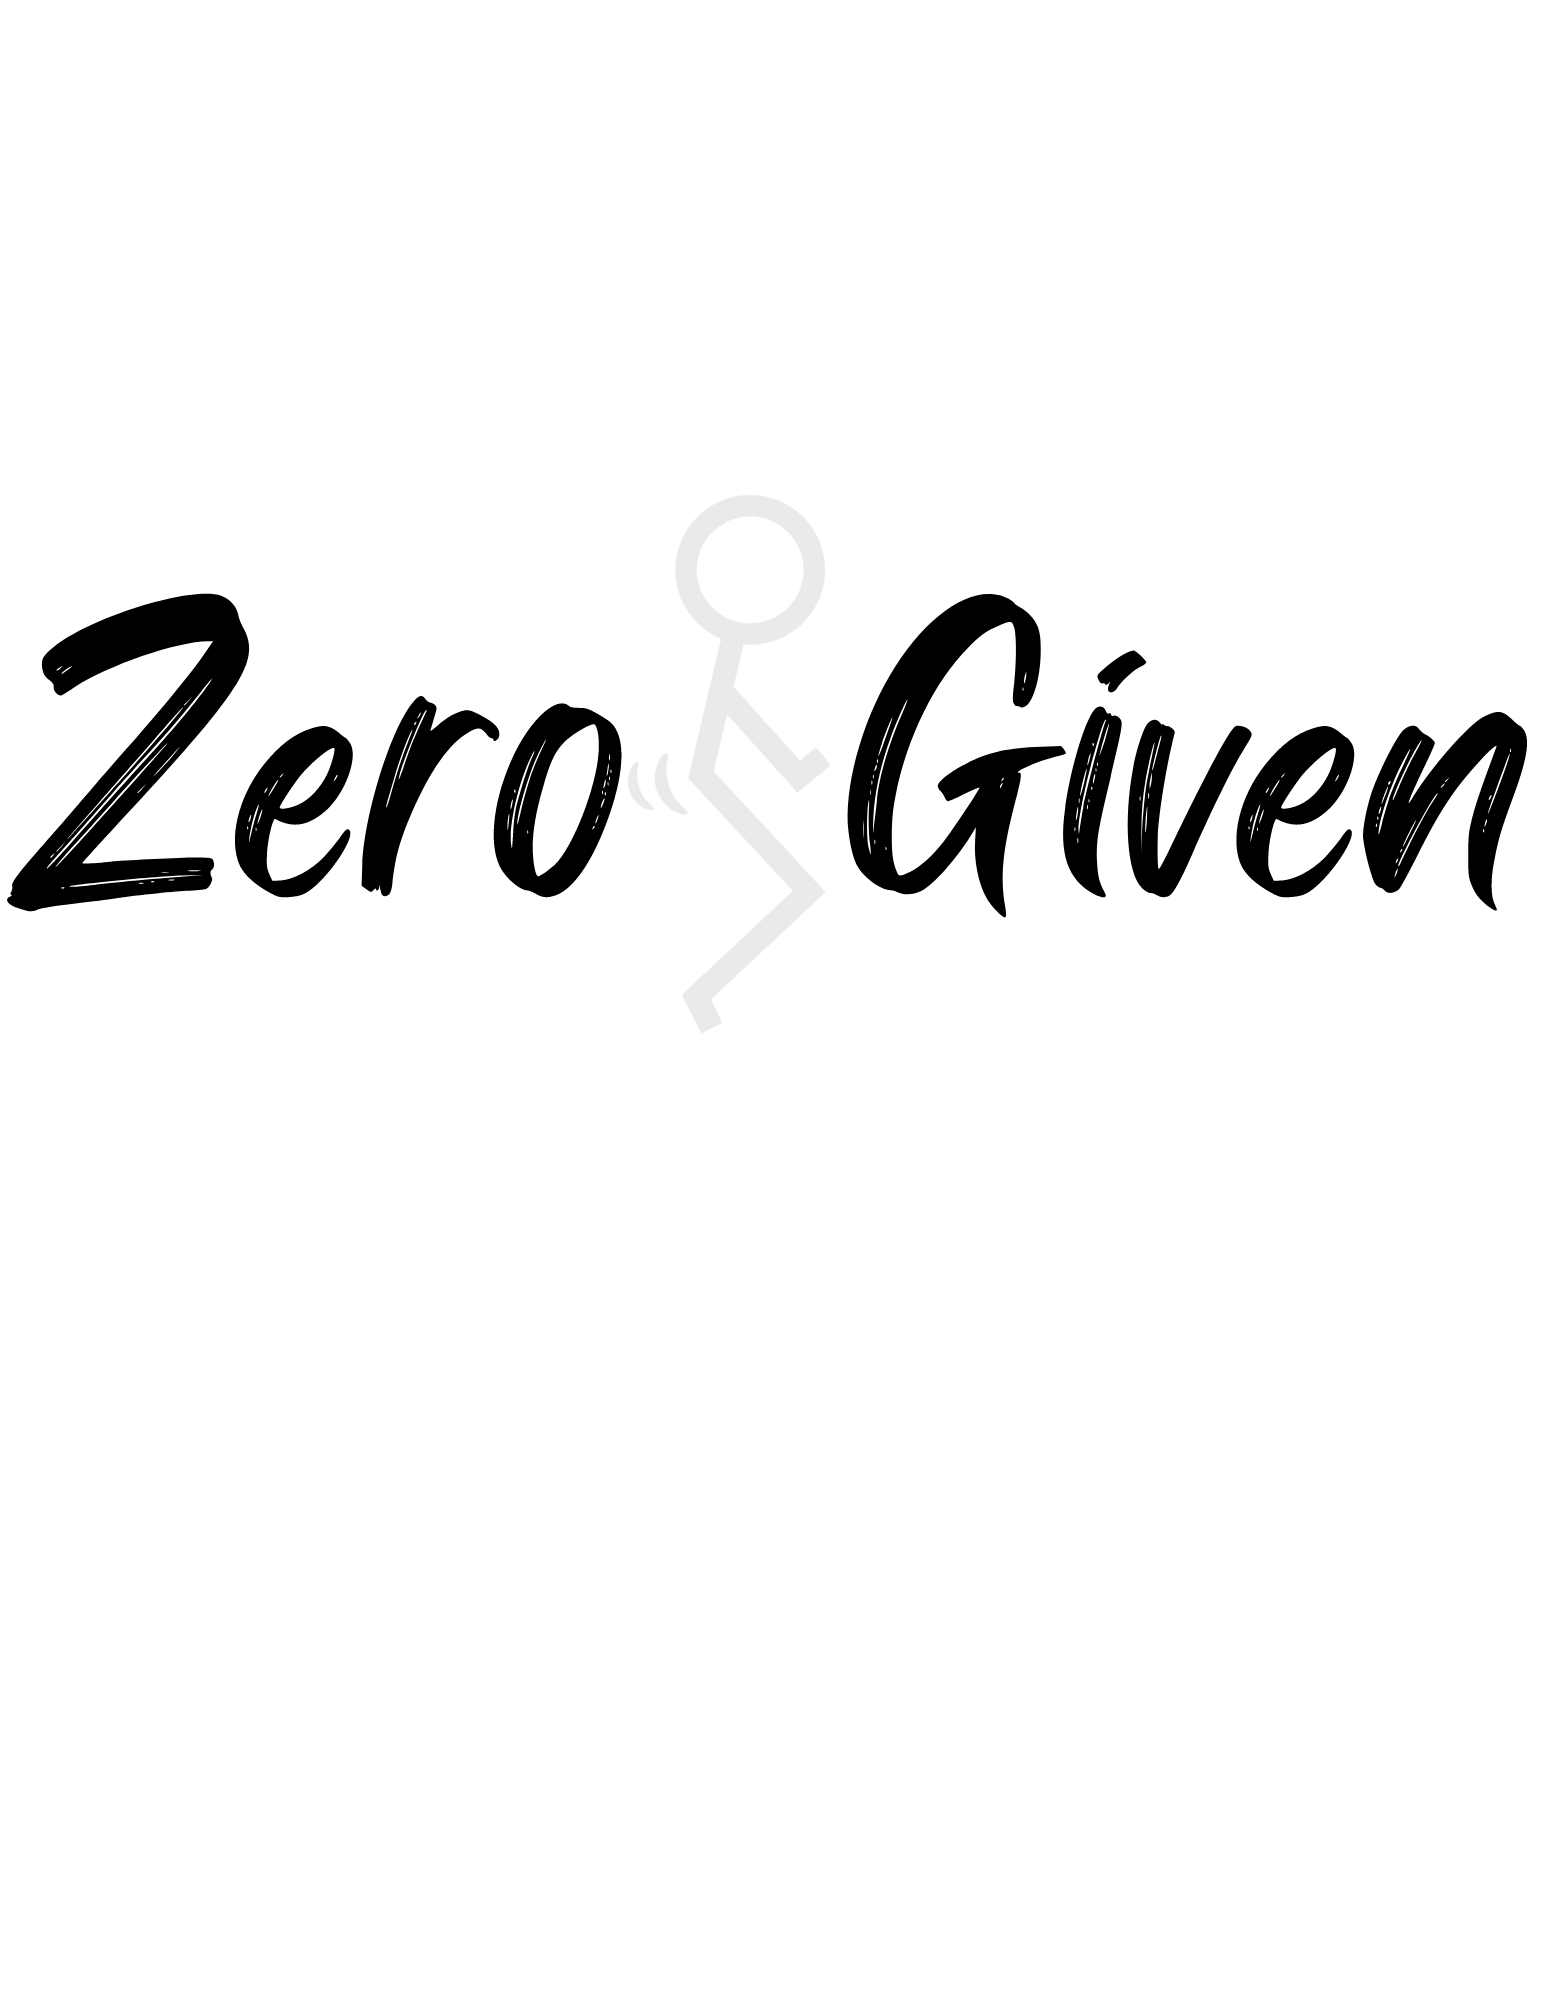 Zero Fucks Given